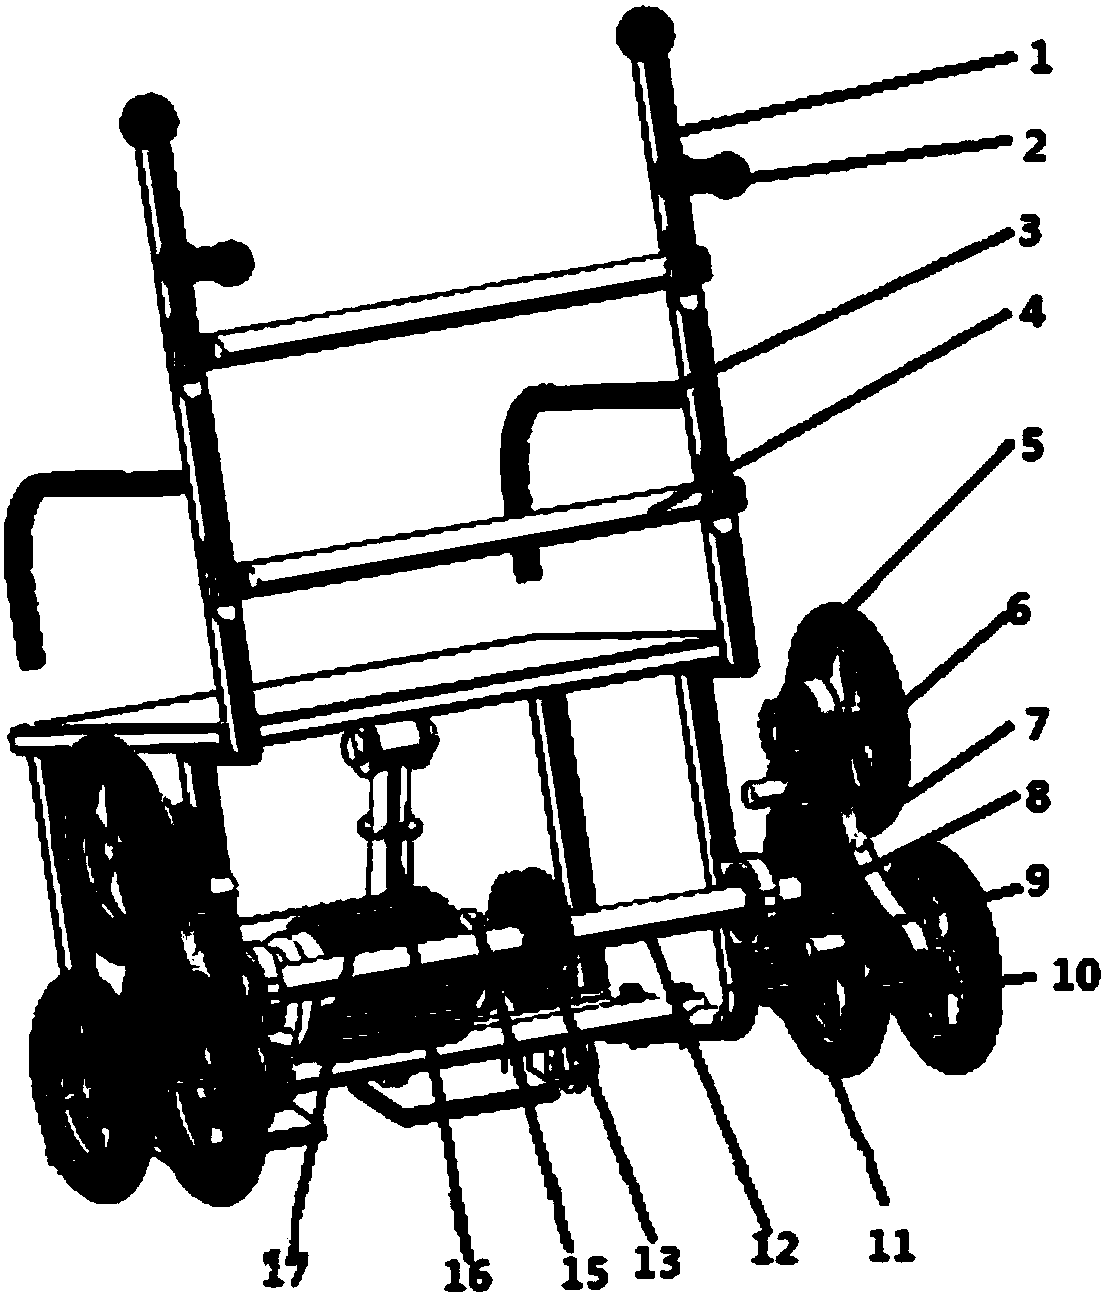 Novel wheelchair capable of climbing stair